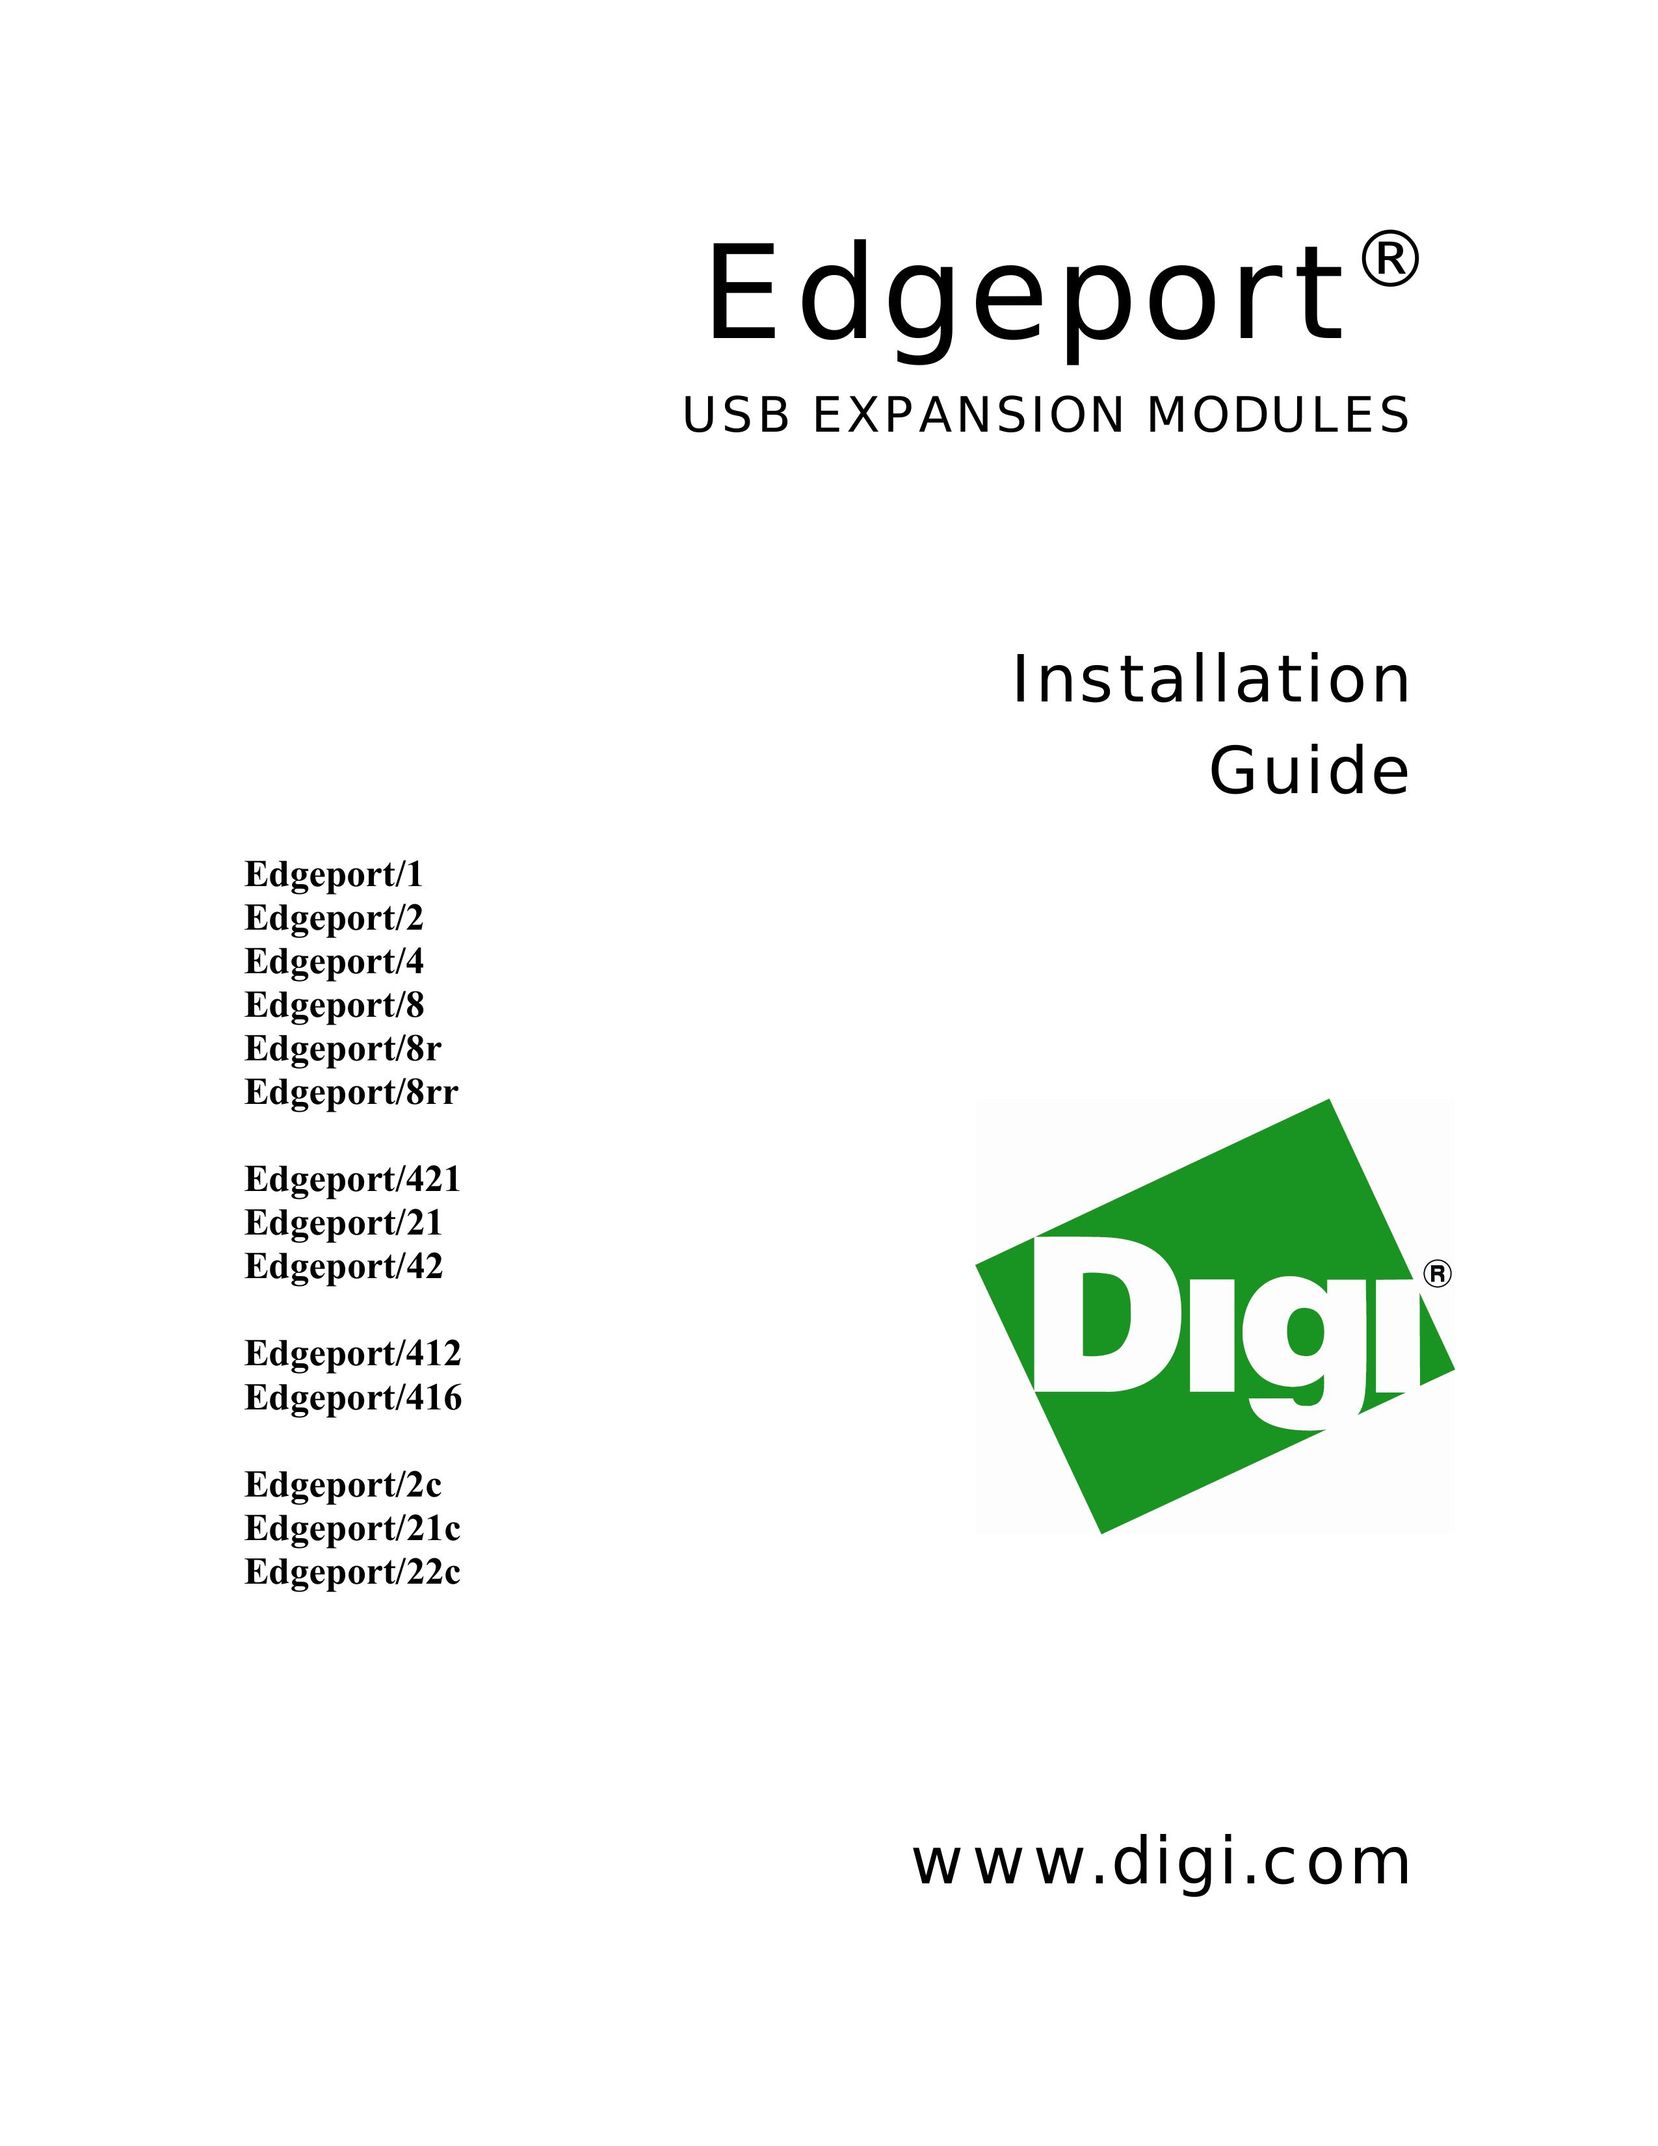 Digi Edgeport/22c Network Card User Manual